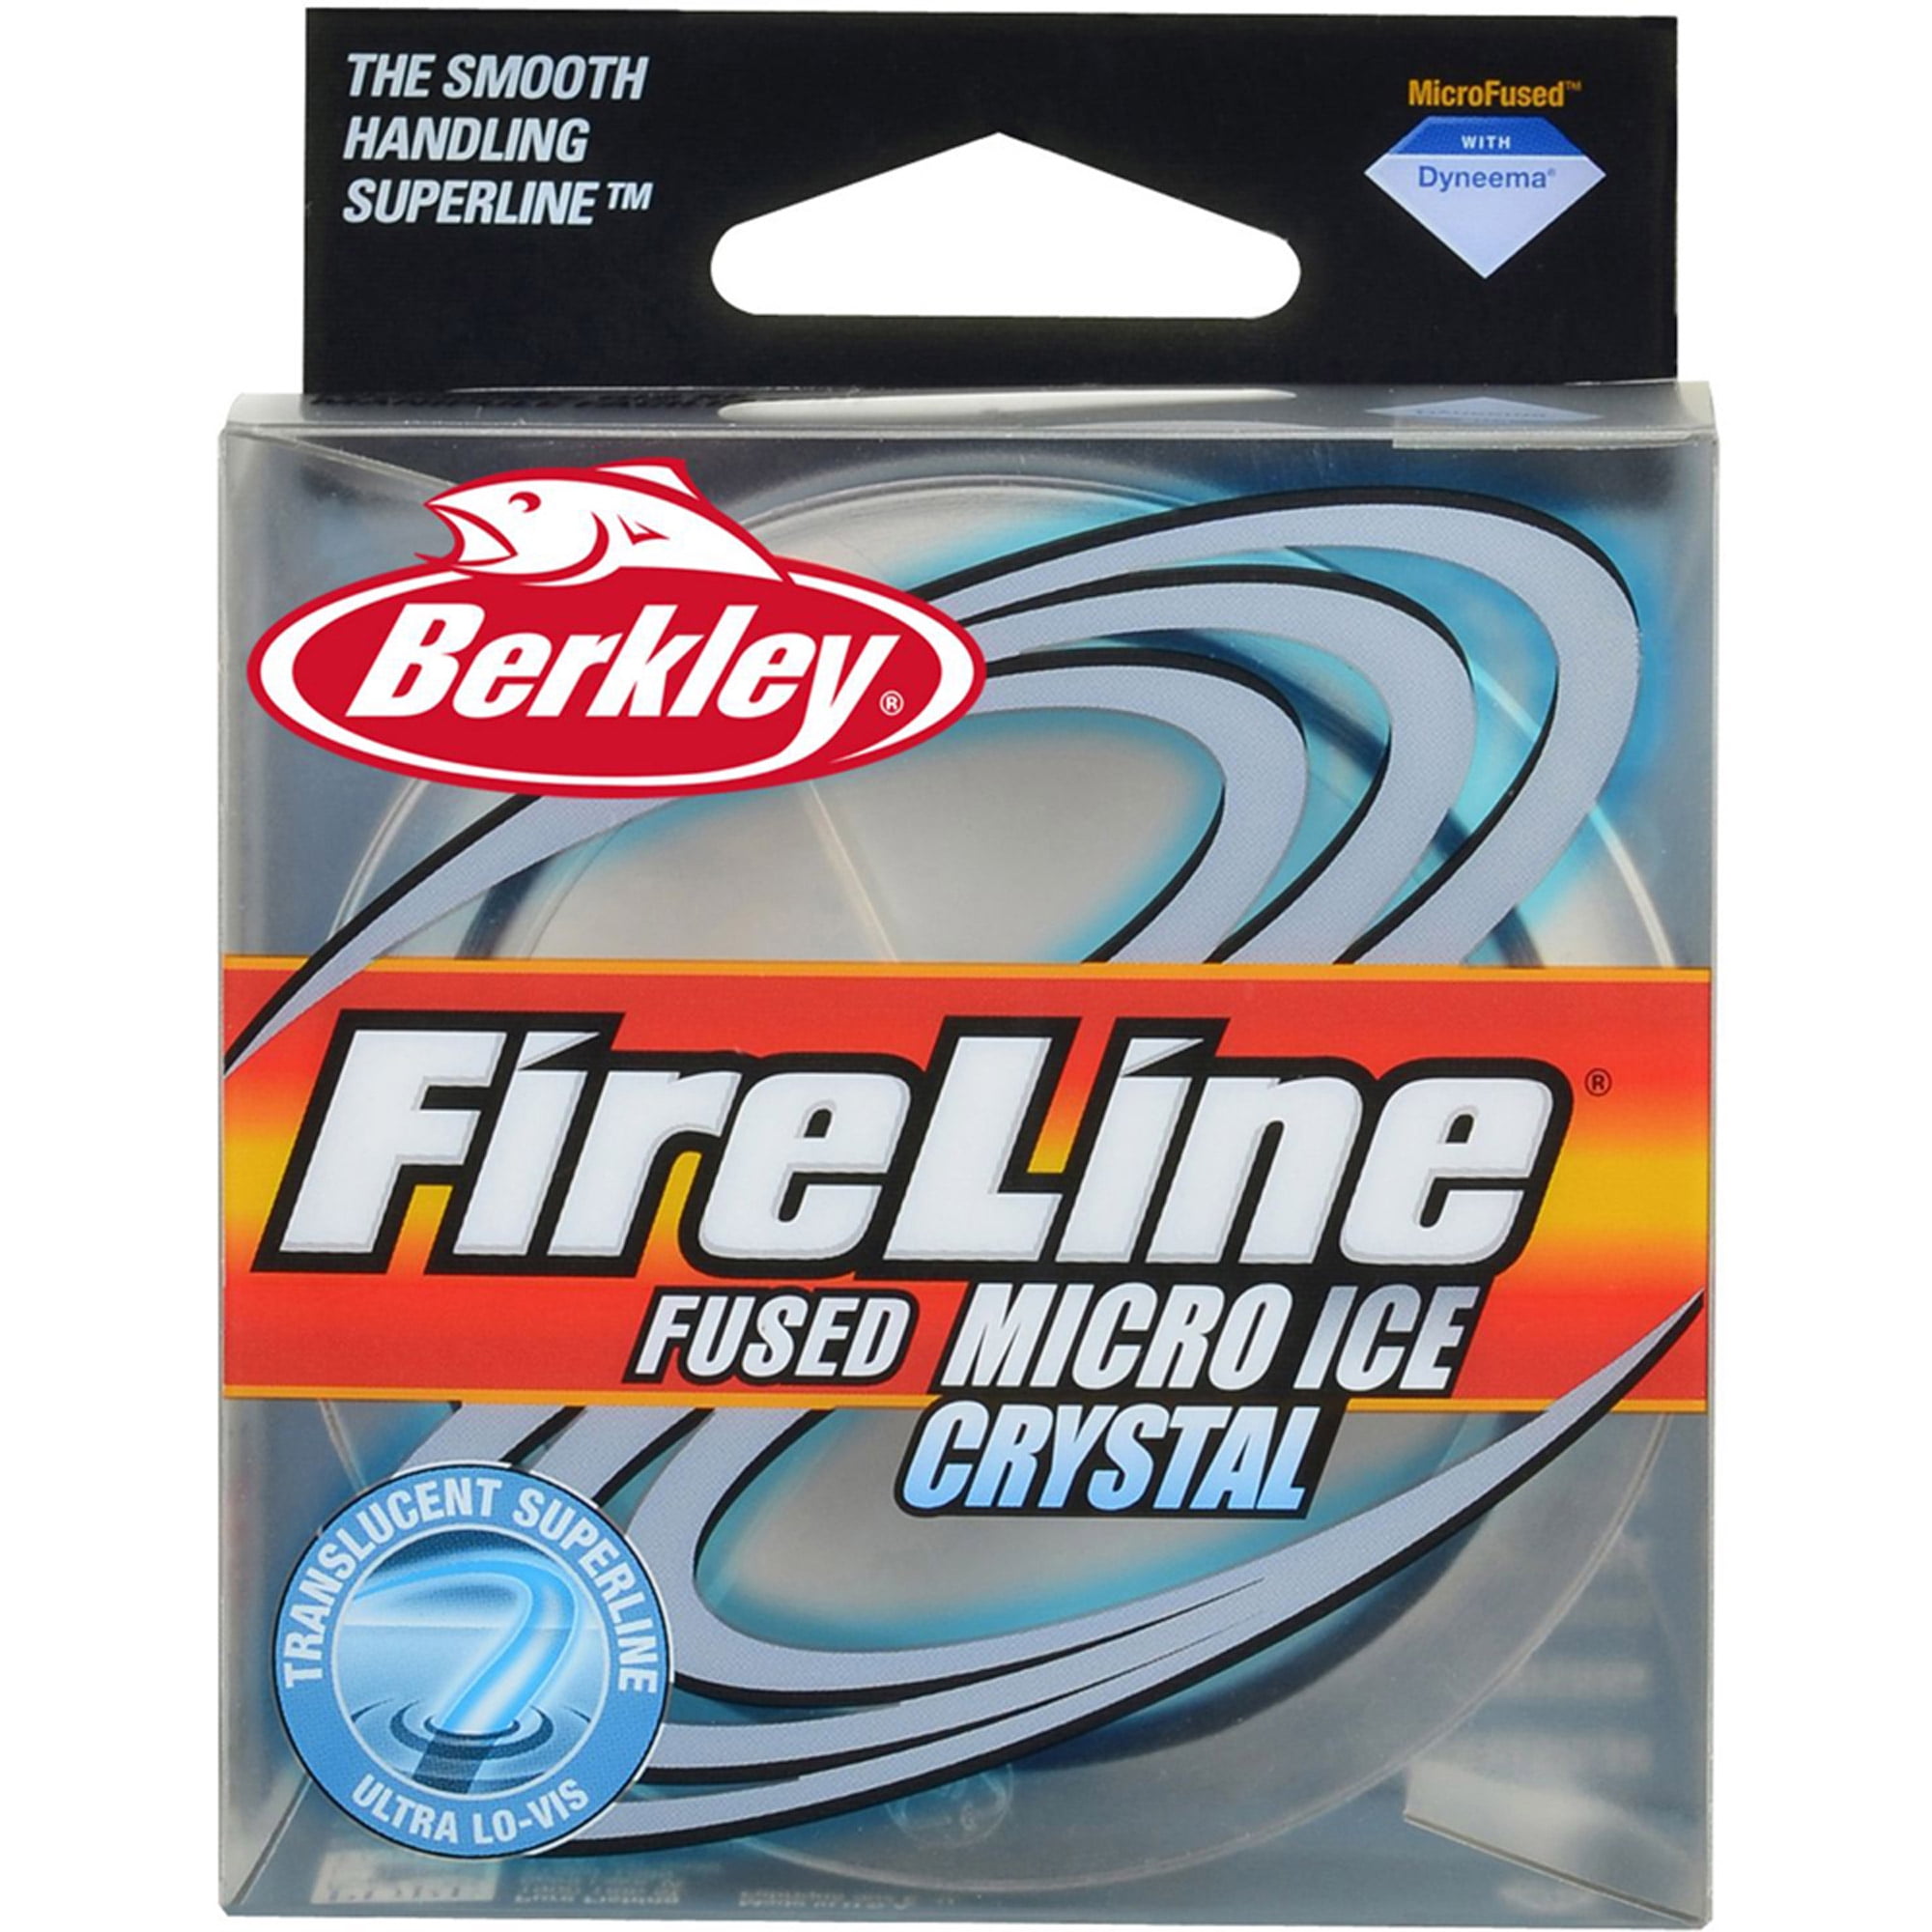 Berkley FireLine Crystal Micro Ice Fishing Line